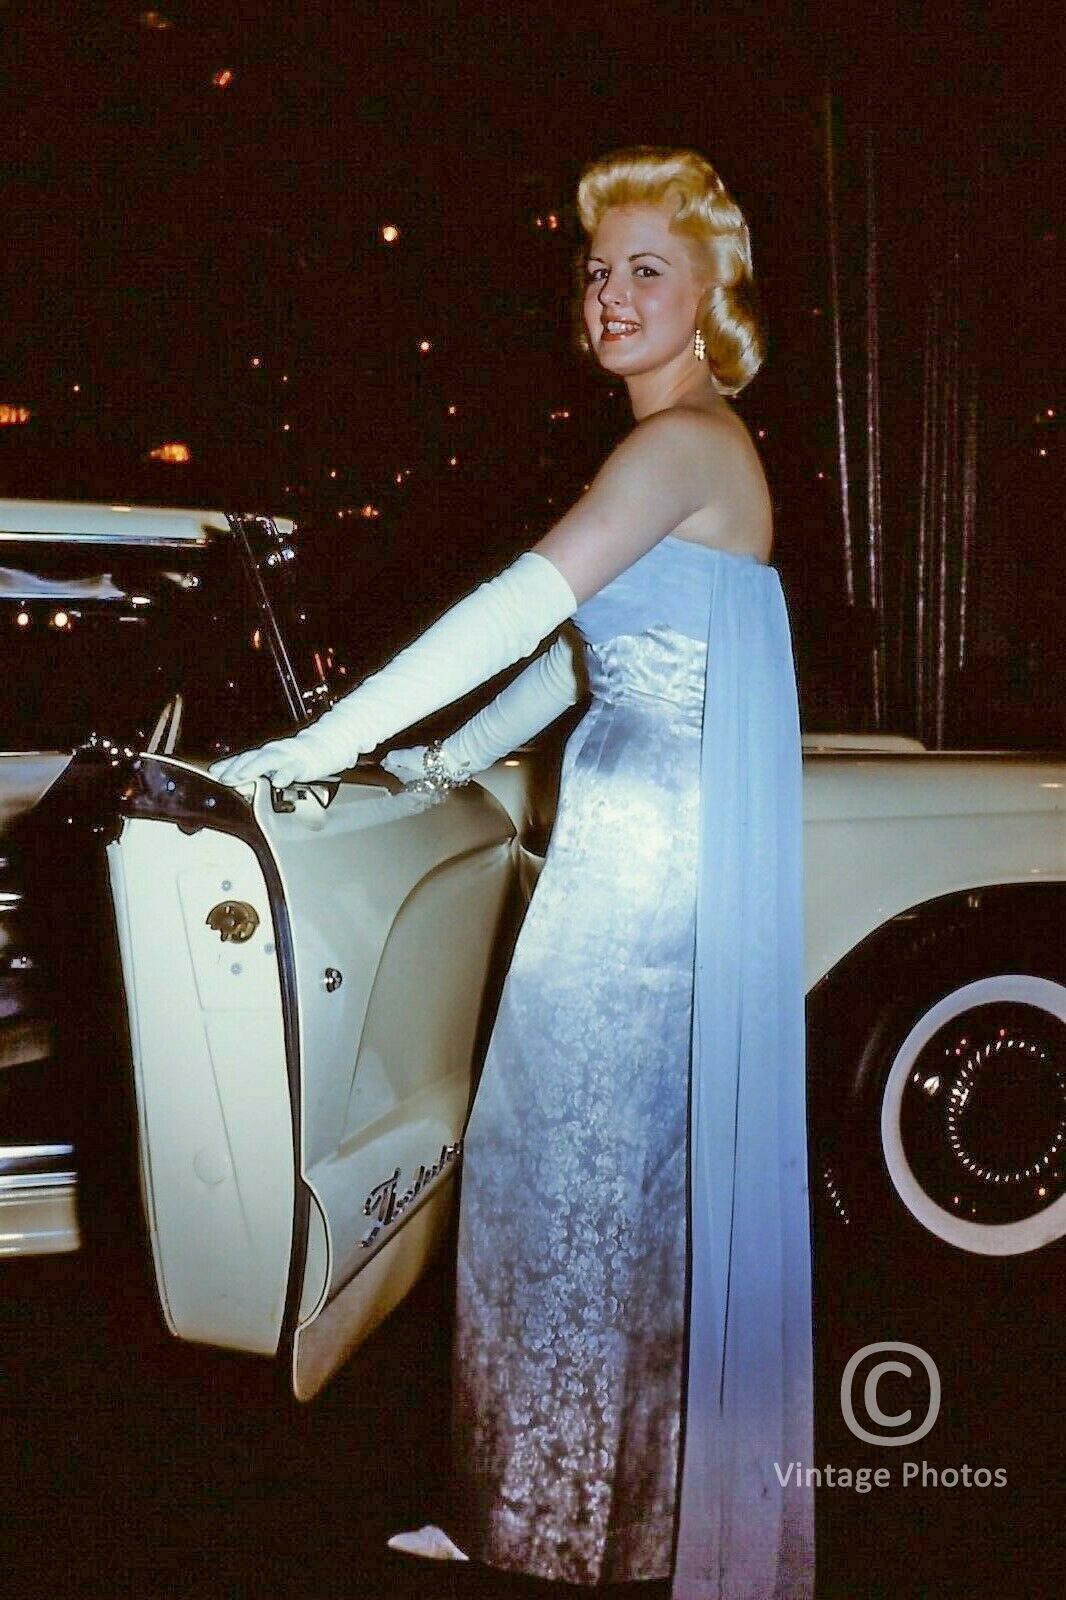 1960s American Fashion, Blonde Model in white Dress & White Convertible Thunderbird Car